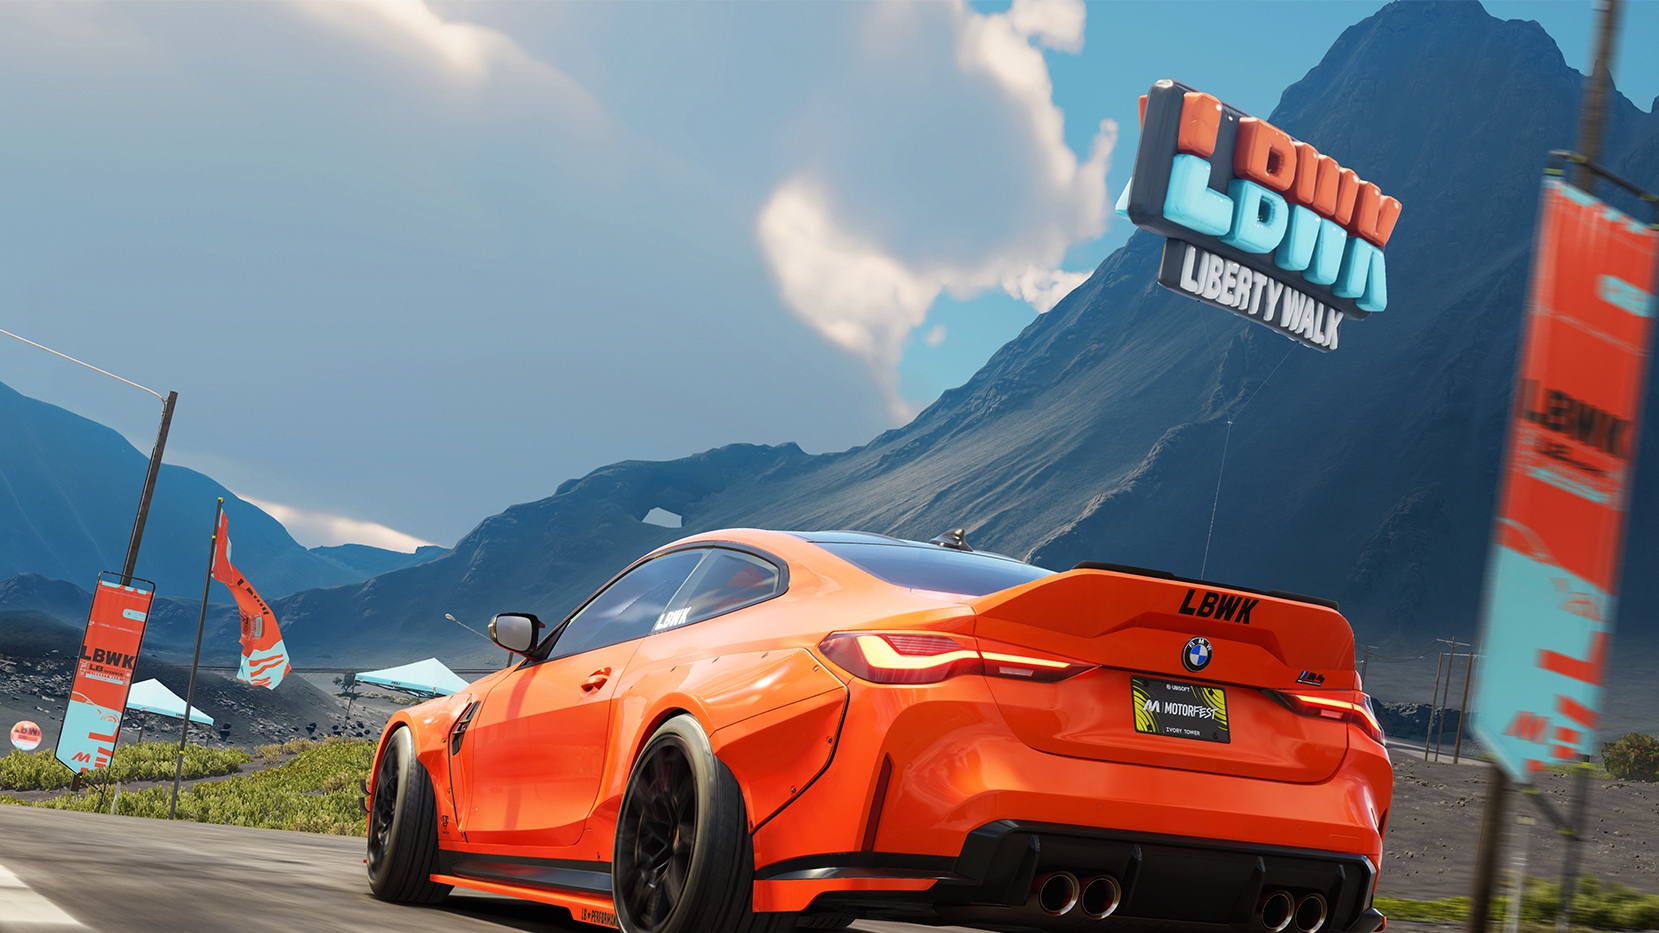 The Crew Motorfest Puts Ubisoft's Open World Racer On The Map